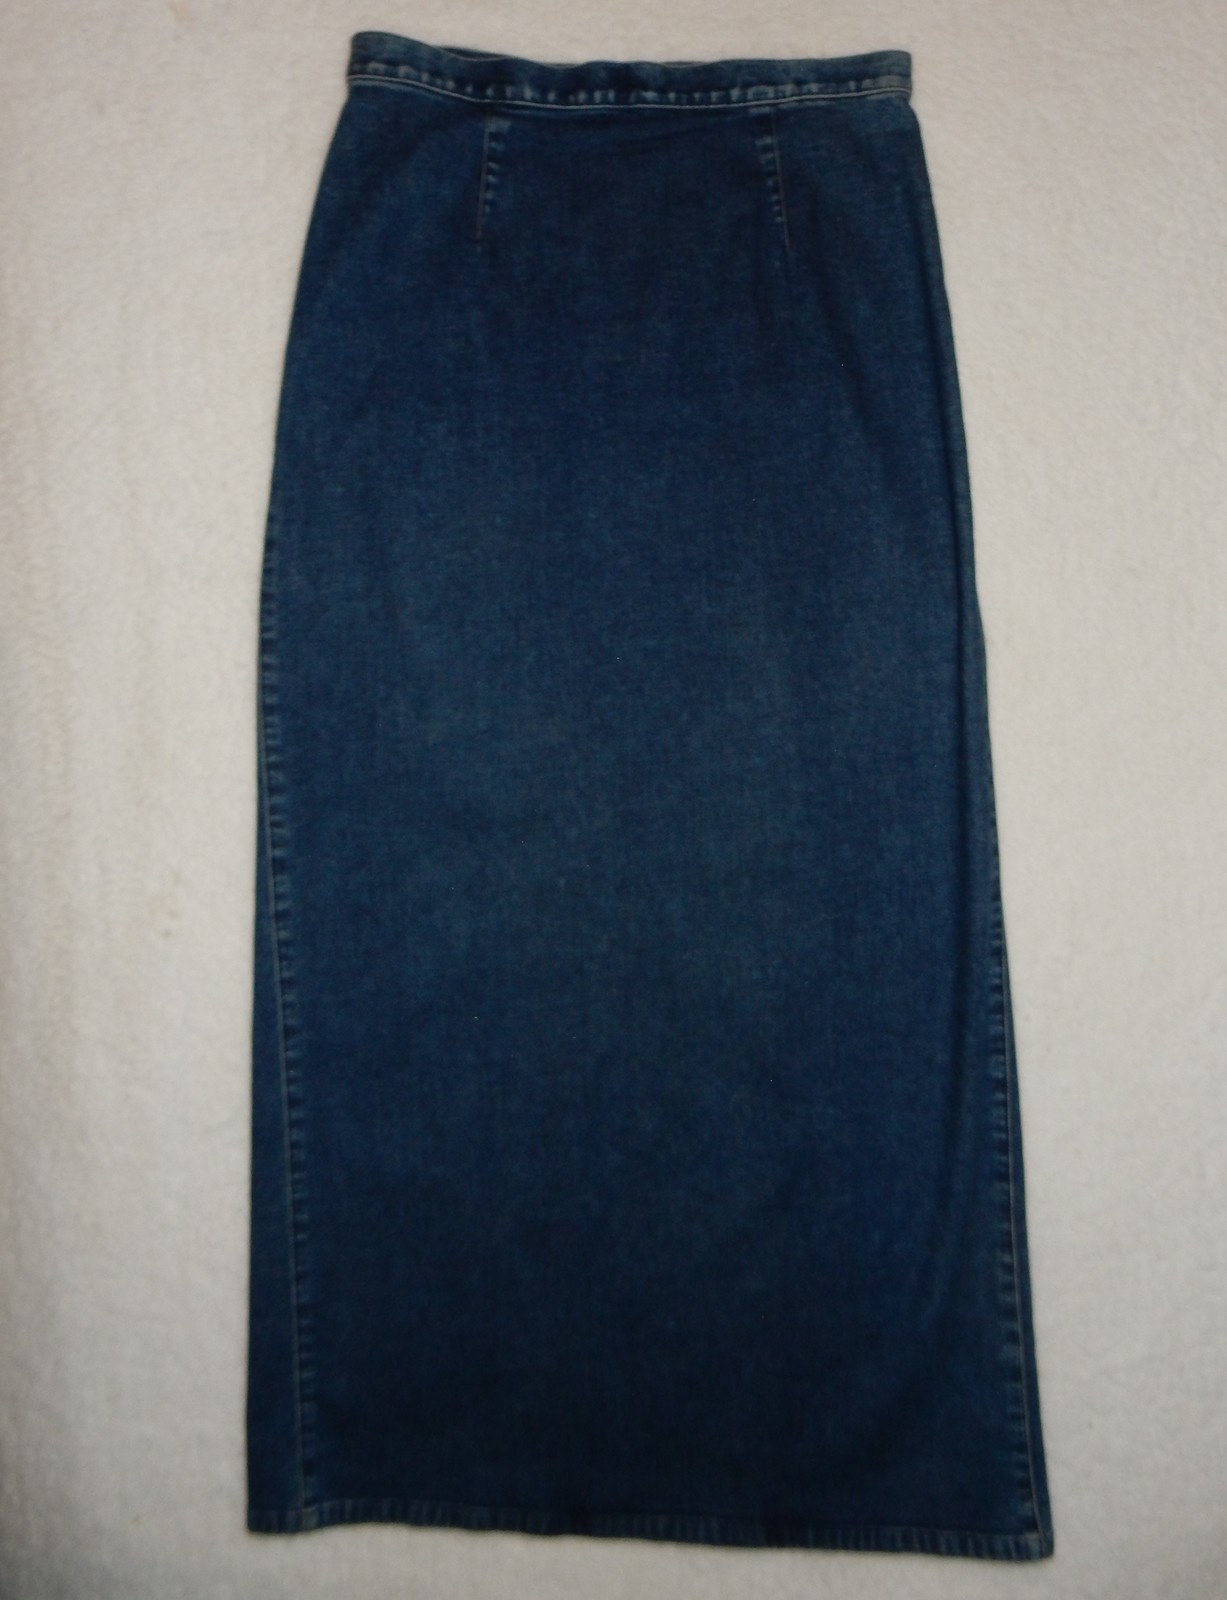 Primary image for liz Claiborne denim skirt